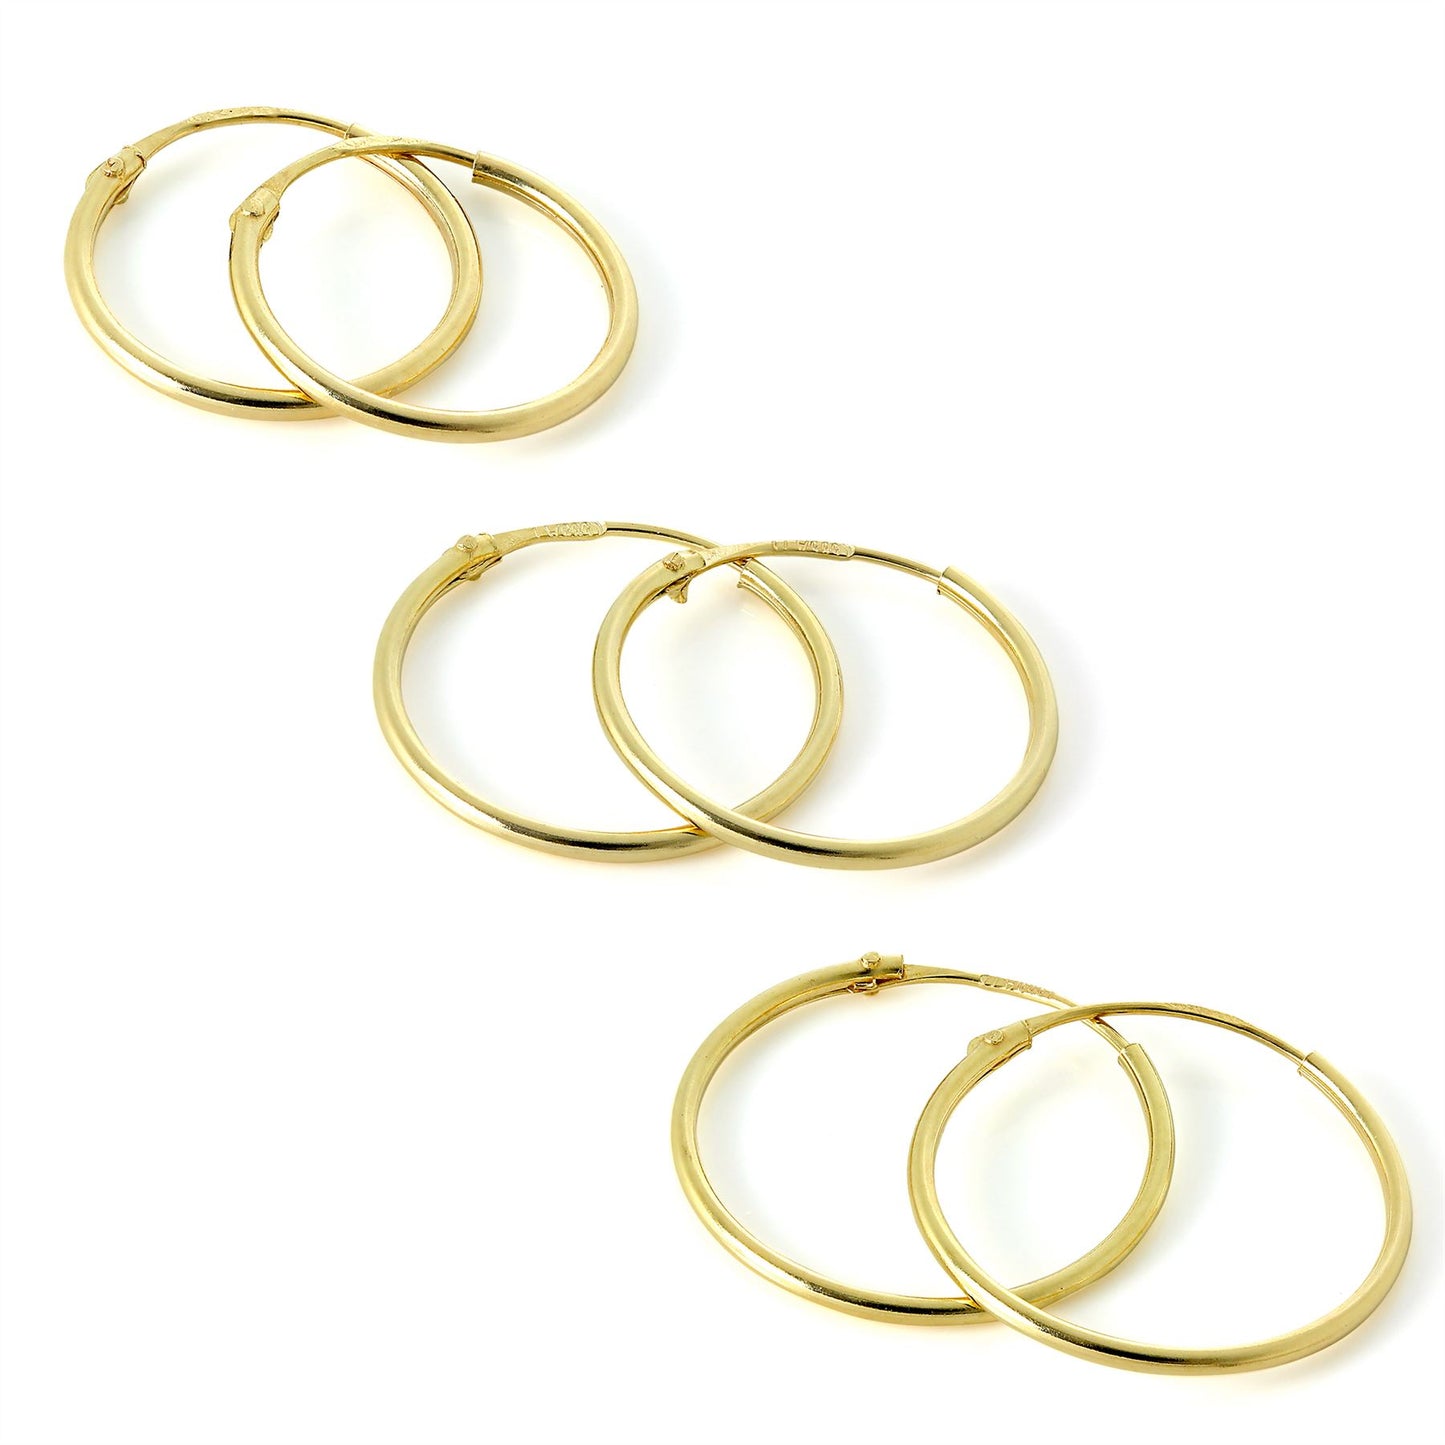 Lightweight 14ct Yellow Gold Sleeper Hoop Earrings 10mm - 13mm